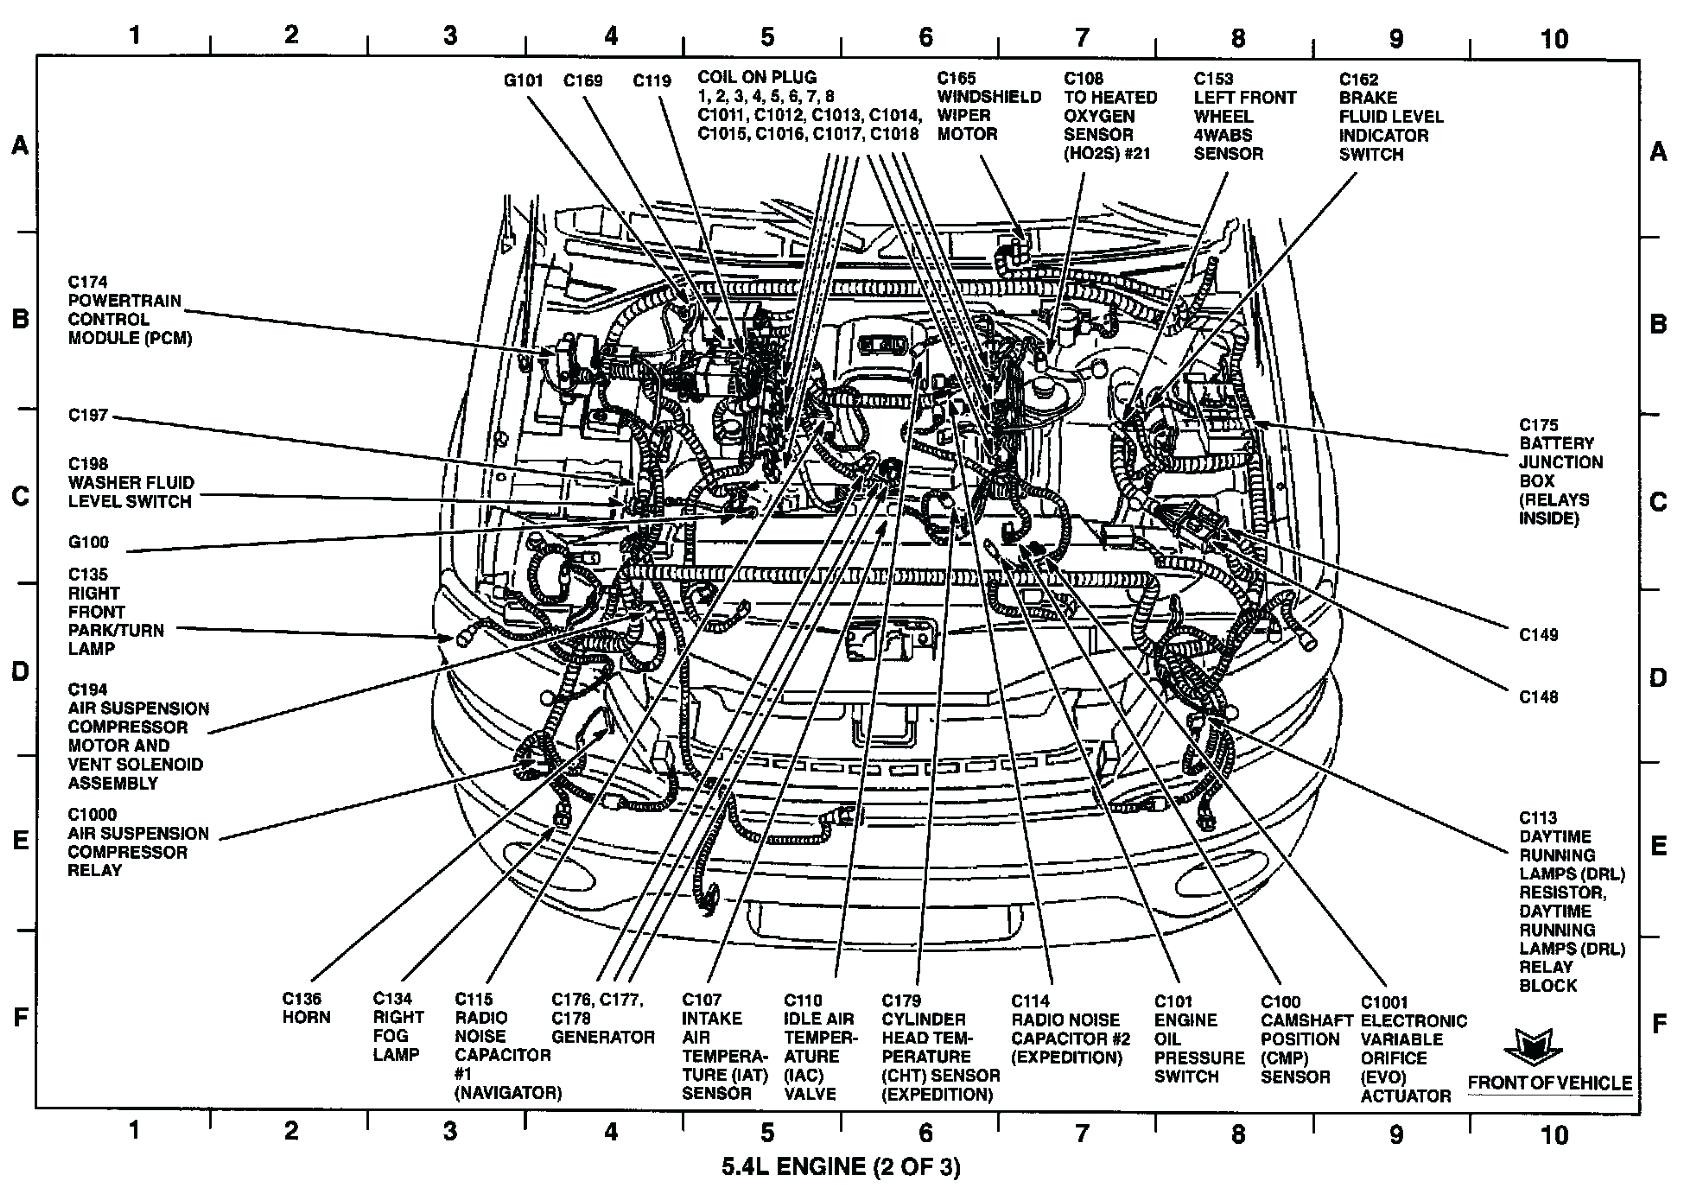 2006 ford Taurus Engine Diagram ford V6 3 7 Engine Diagram Of 2006 ford Taurus Engine Diagram